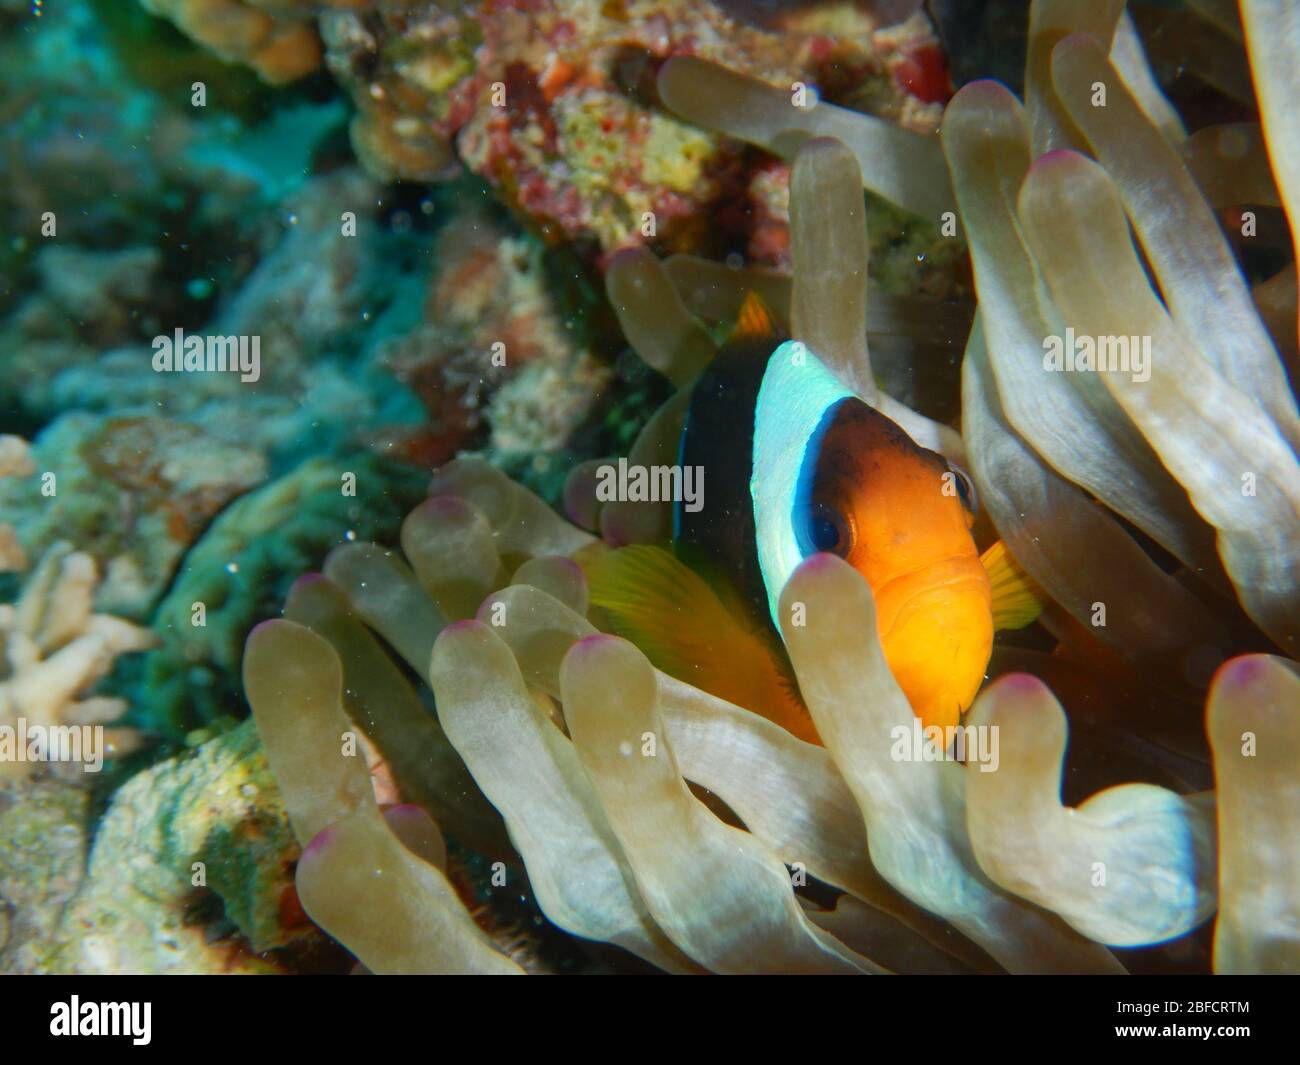 Amphiprioninae, Clownfish or anemonefish Stock Photo